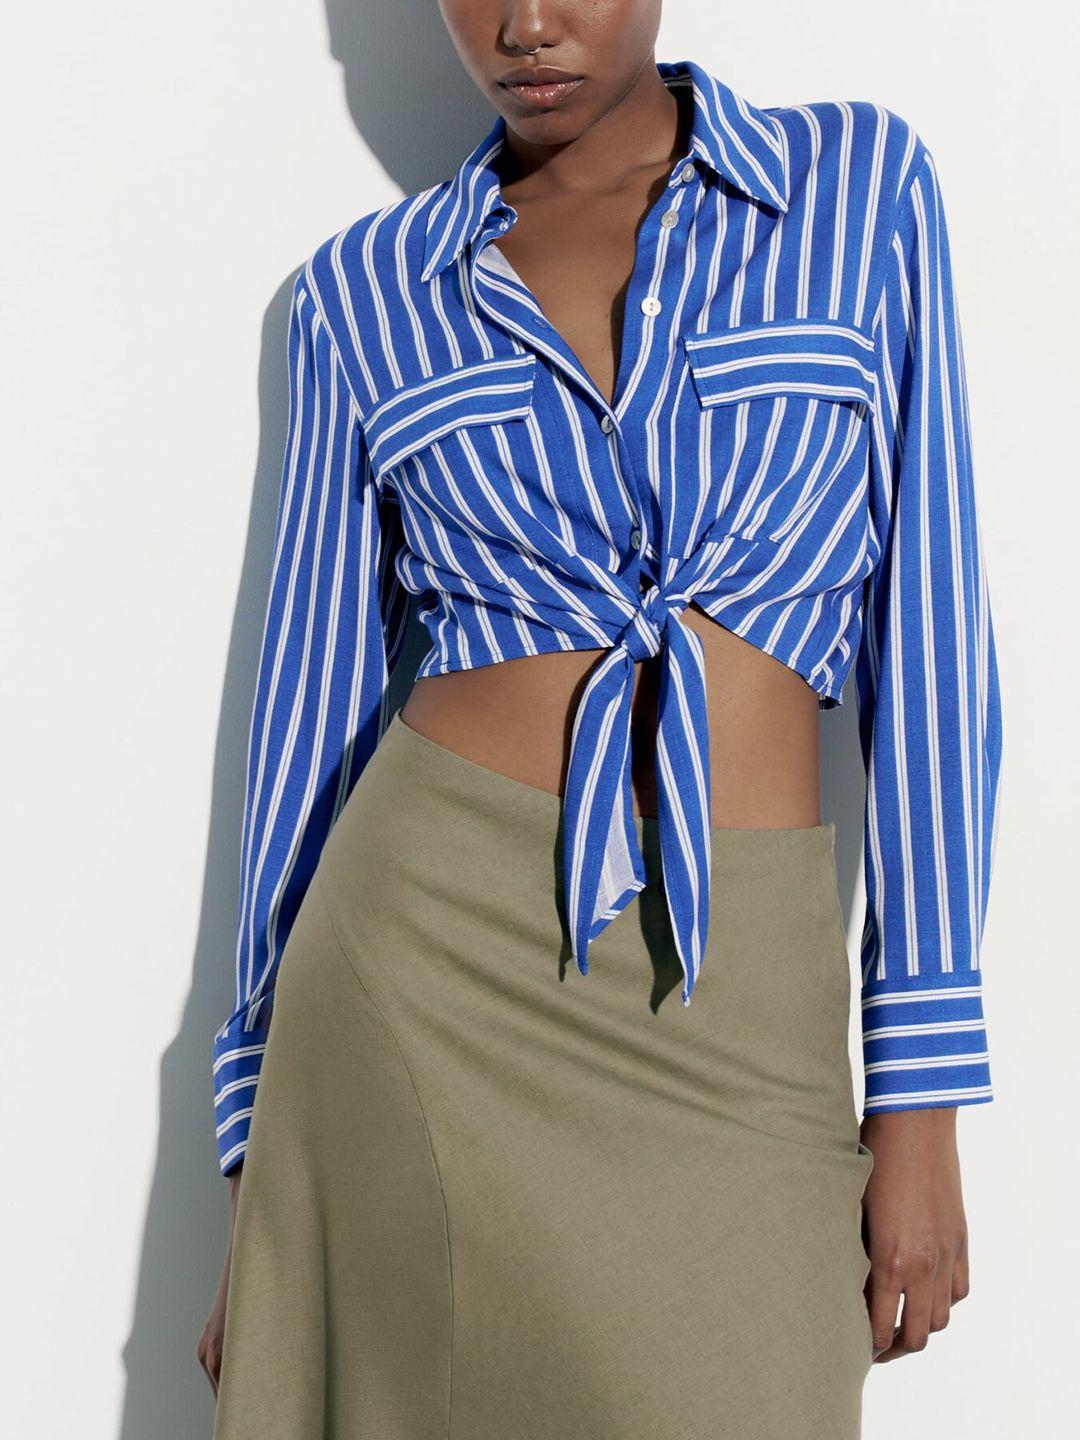 lulu & sky striped shirt style crop top